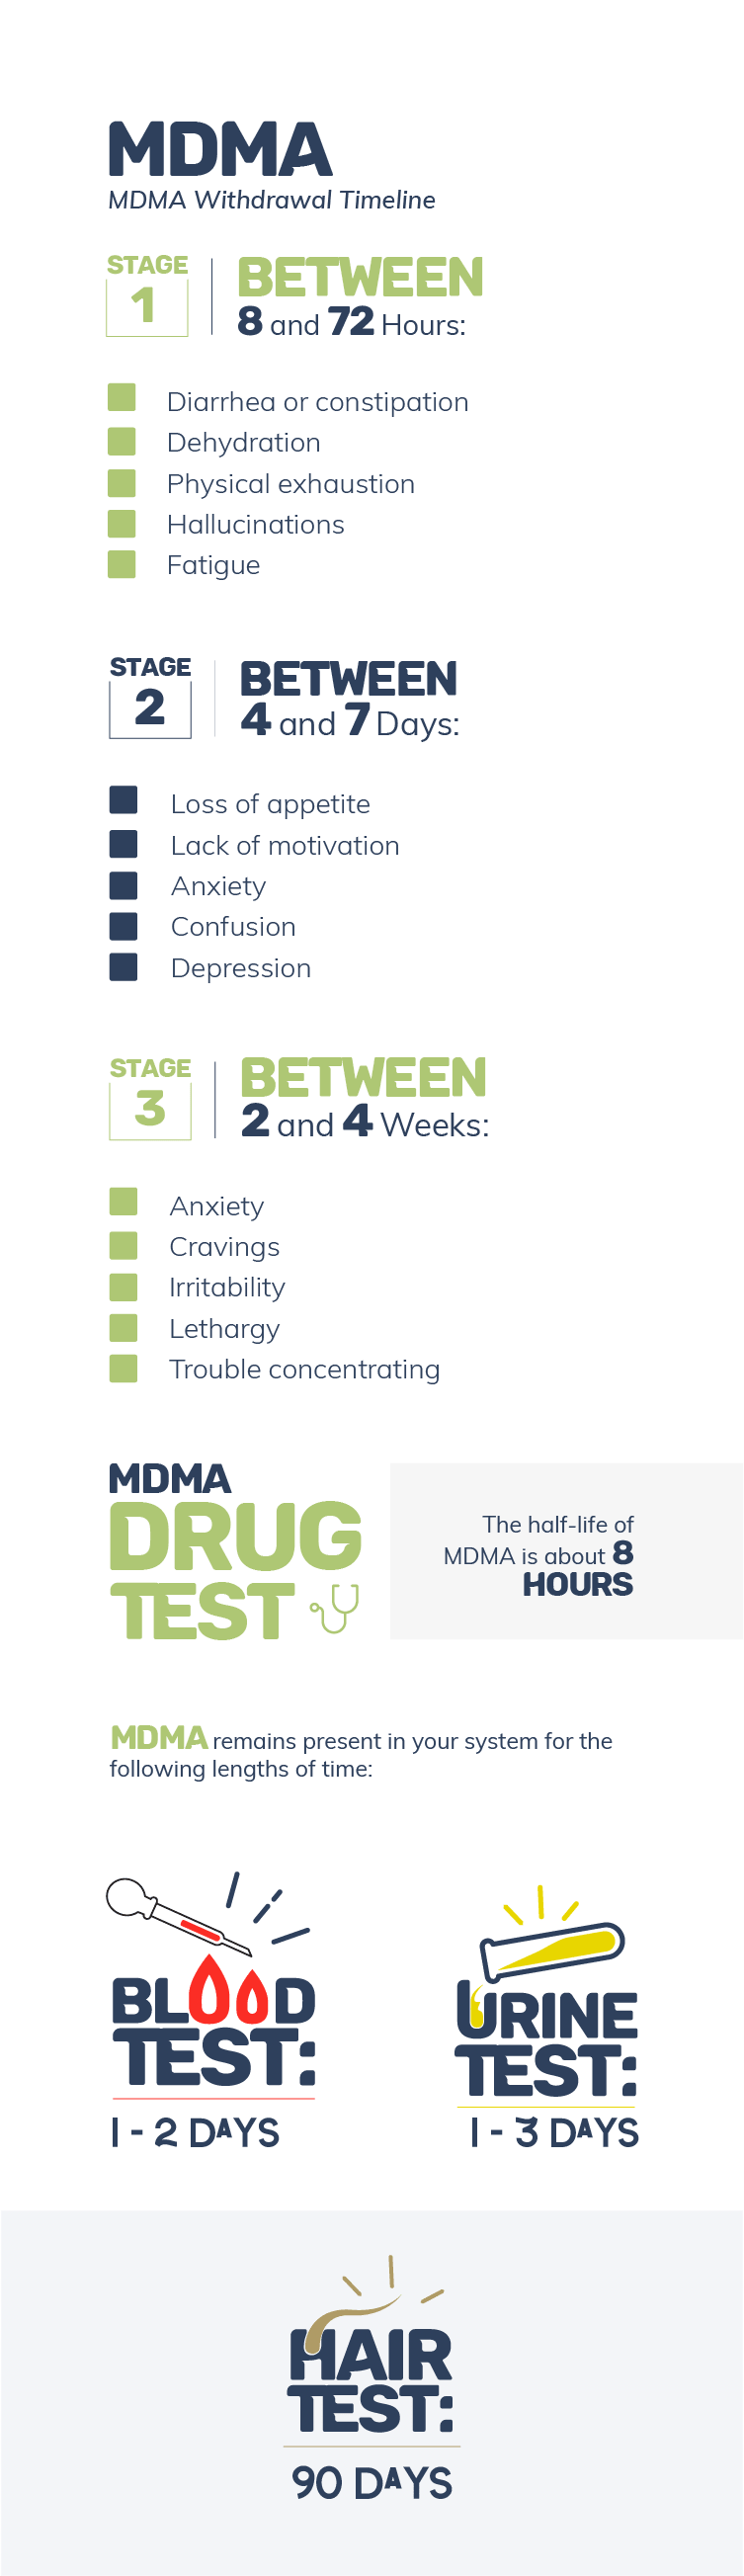 MDMA Withdrawal Timeline Mobile